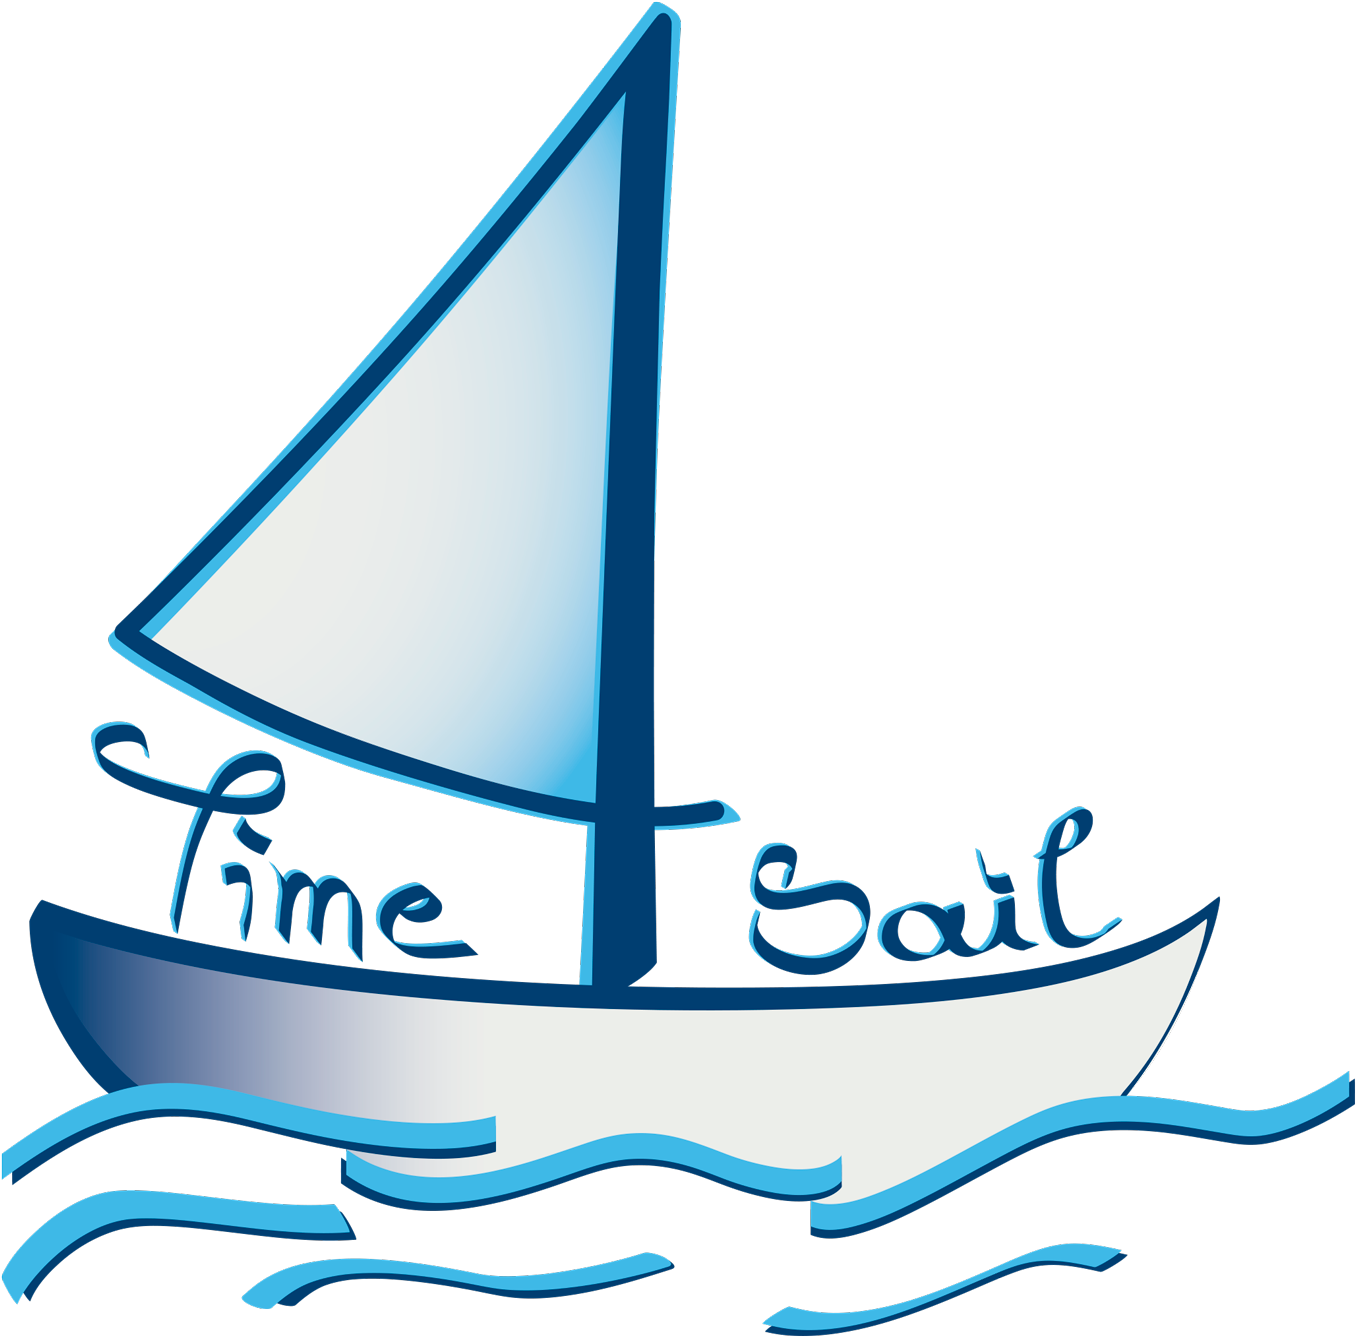 Time4sail Logo Transparent Web - Lake Neusiedl (1500x1481)